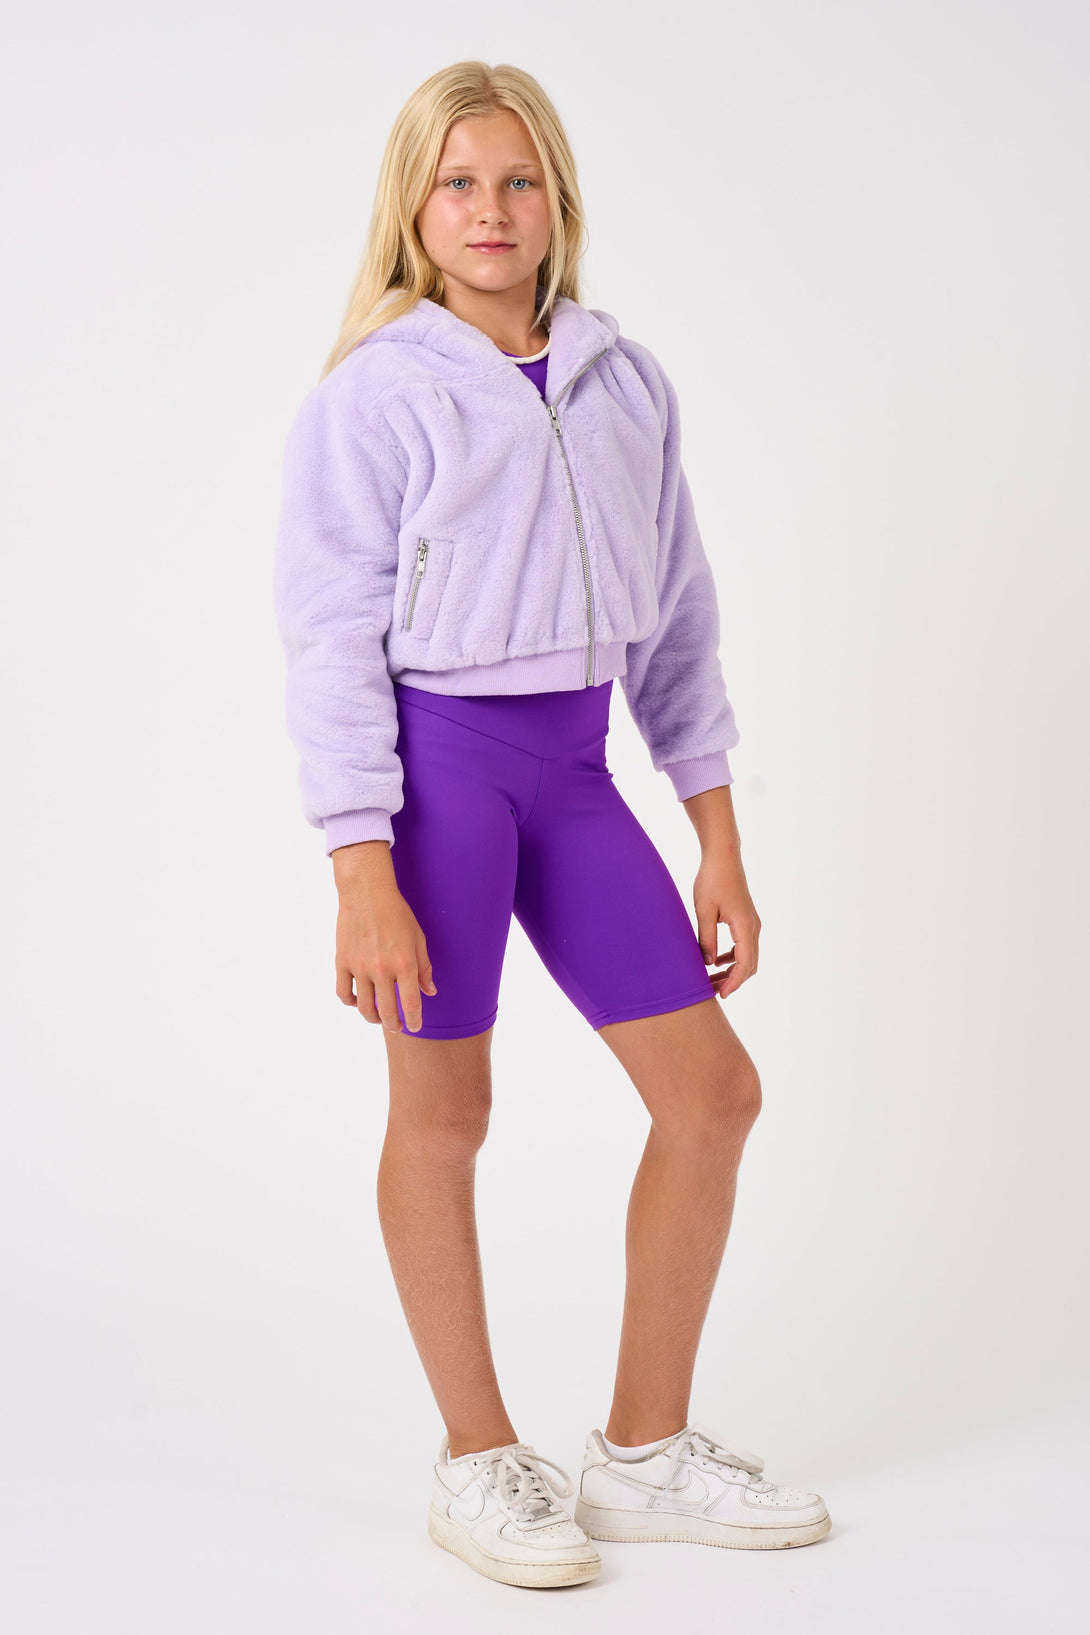 Pastel Purple Faux Fur - Kids Floofy Jacket-Activewear-Exoticathletica